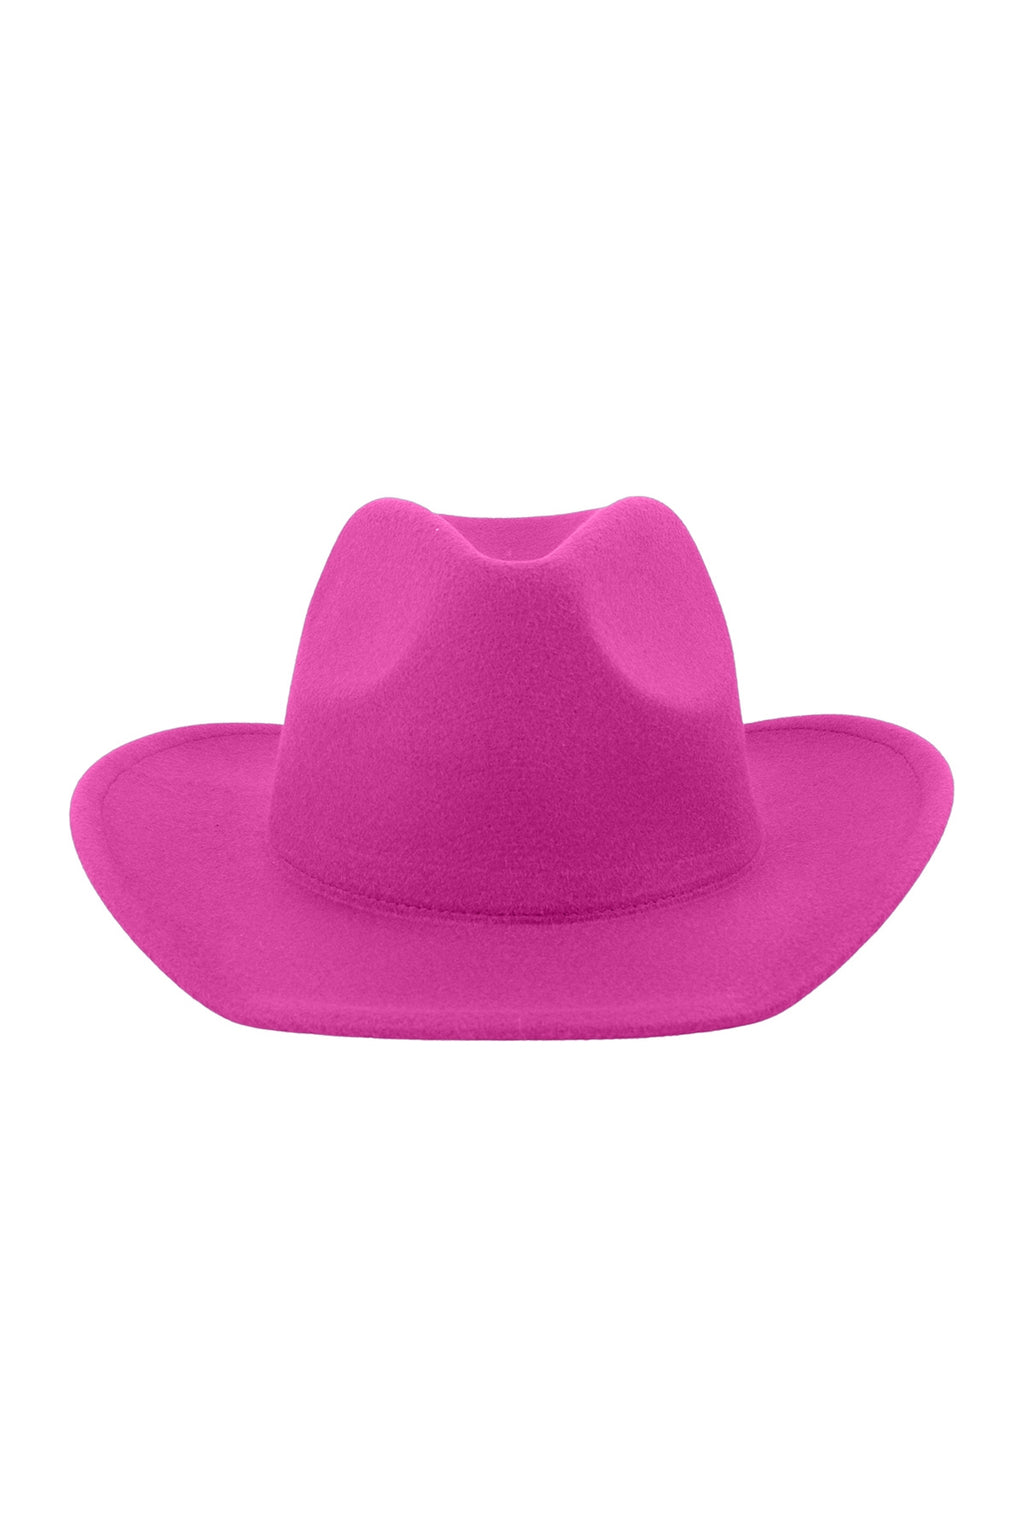 Felt Fashion Brim Hat Hot Pink - Pack of 6